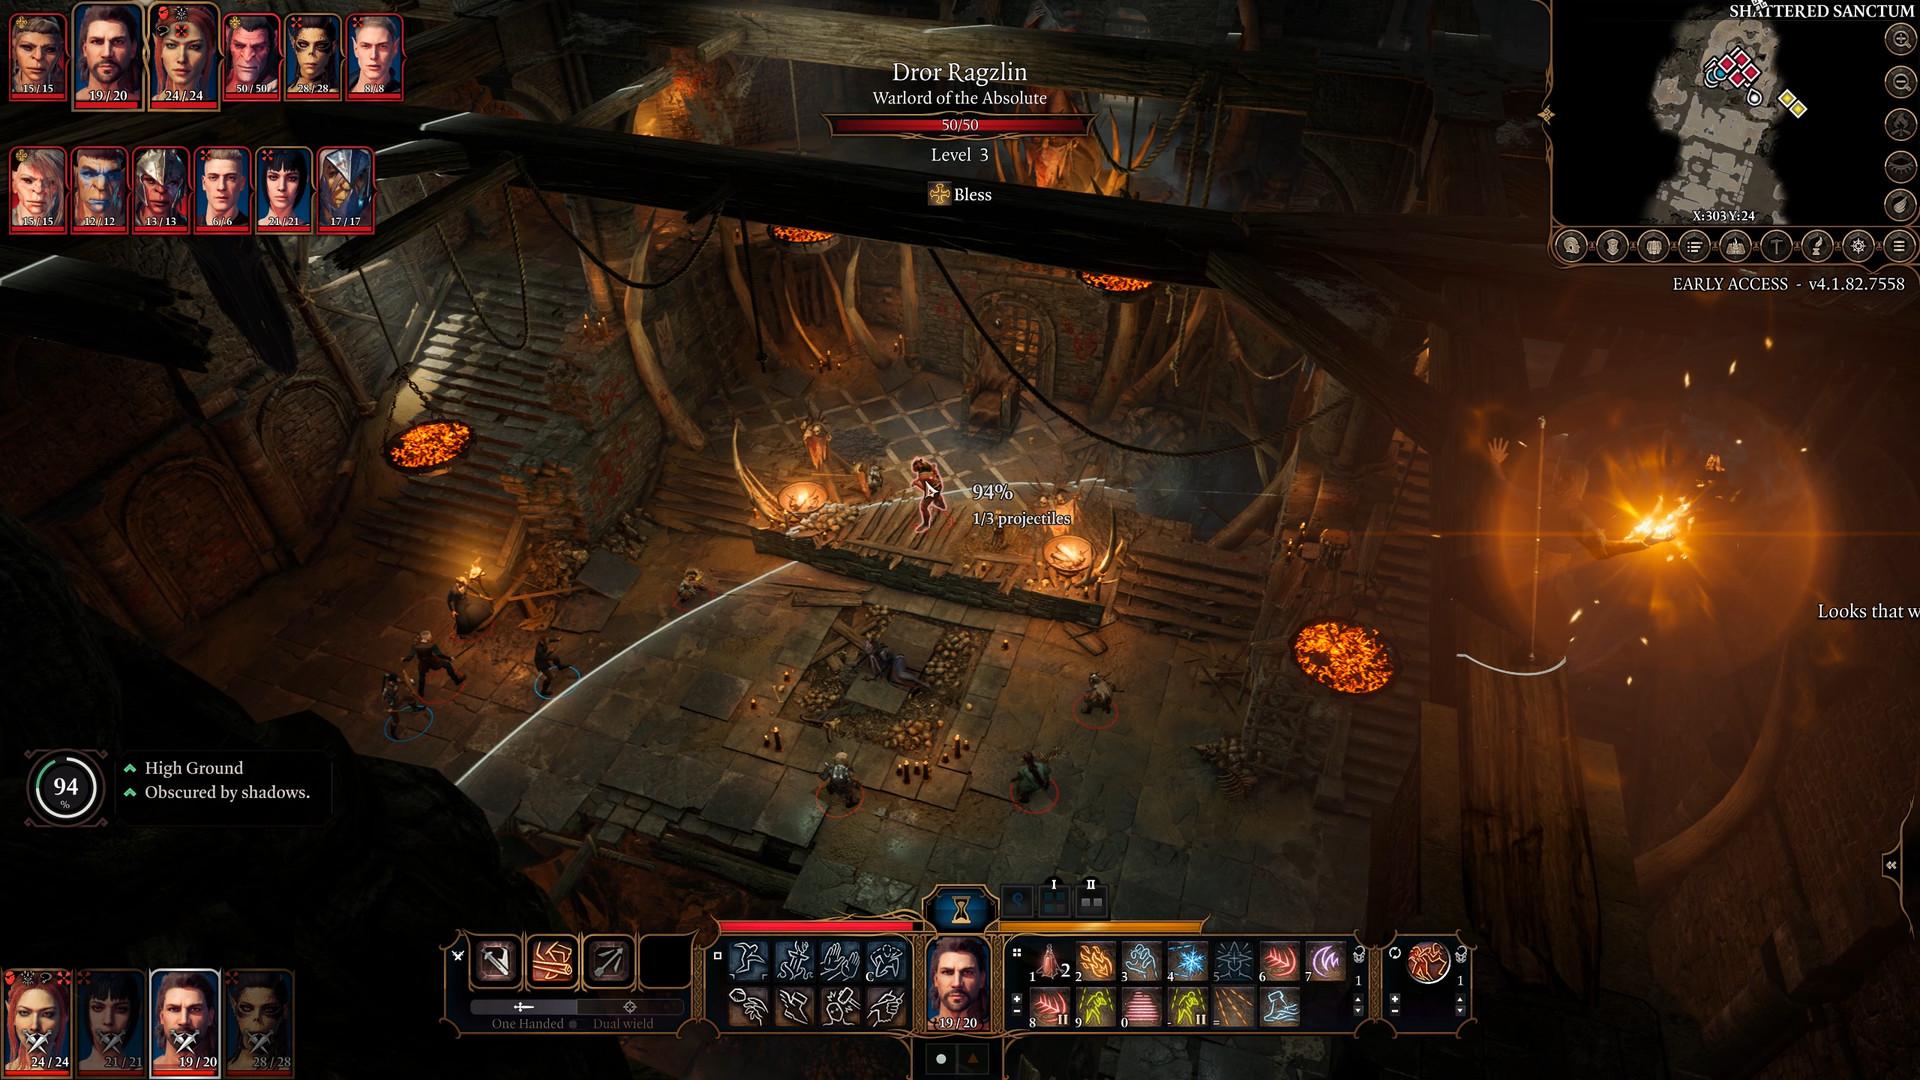 Screenshot №17 from game Baldur's Gate 3